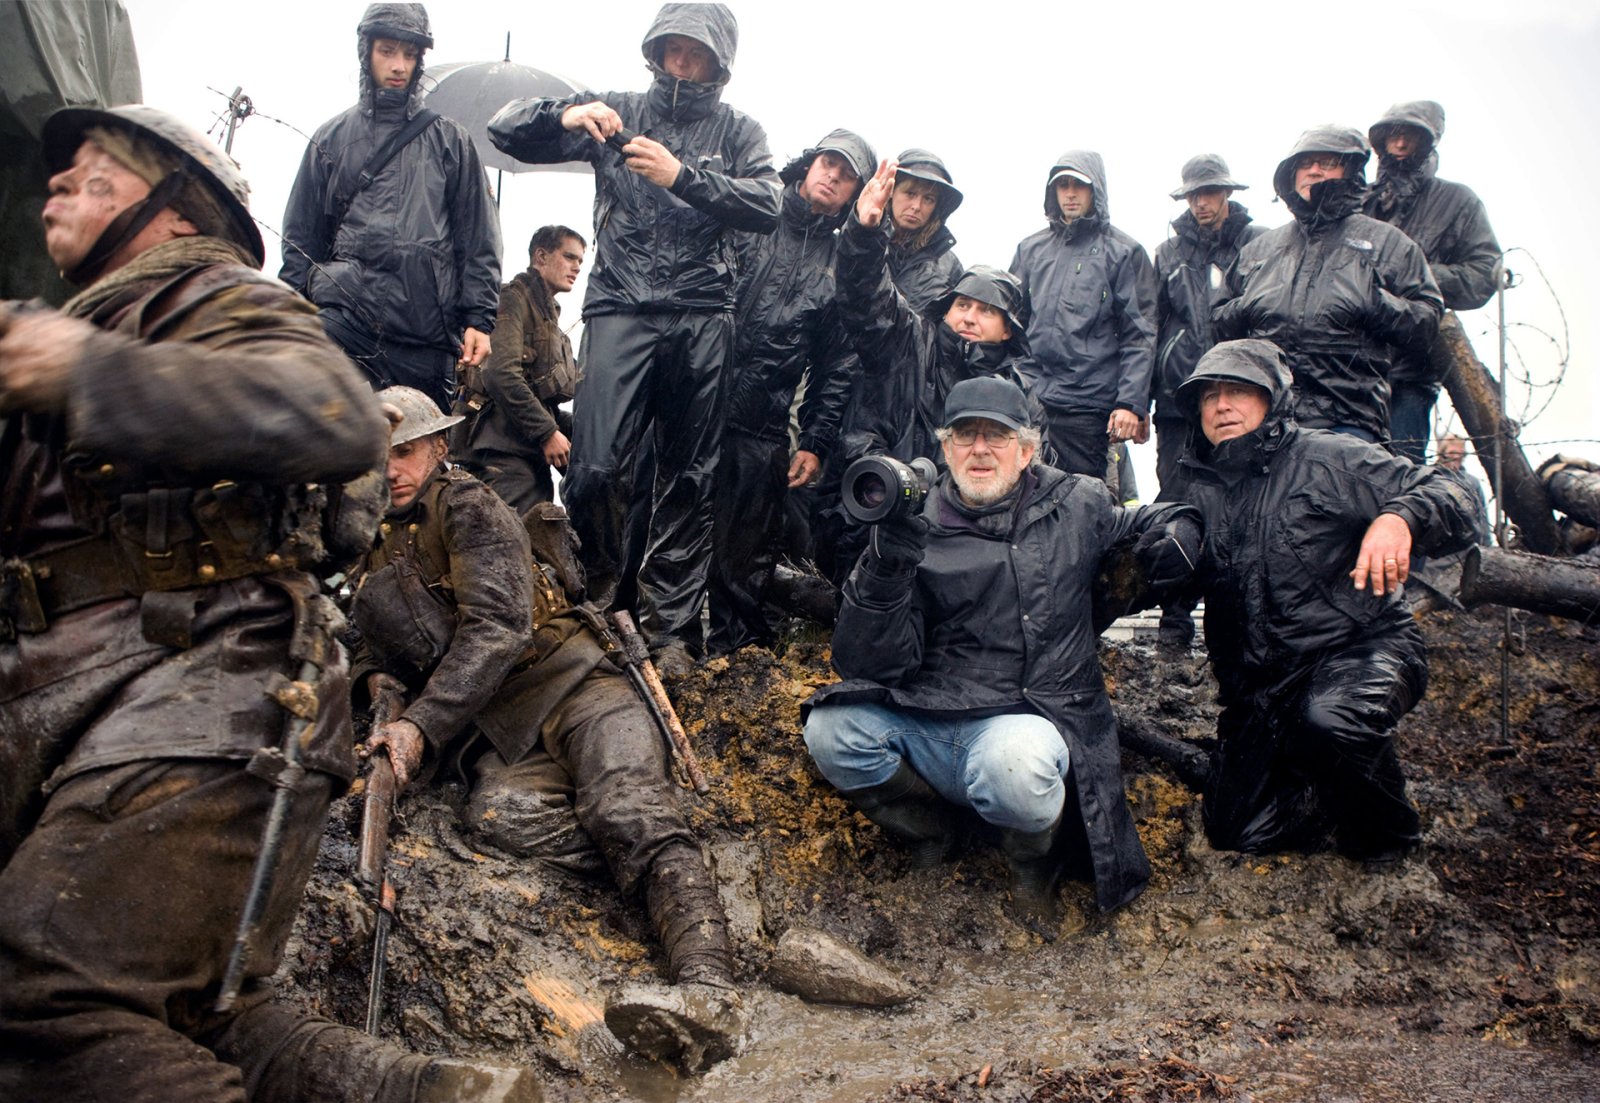 Steven Spielberg in War Horse